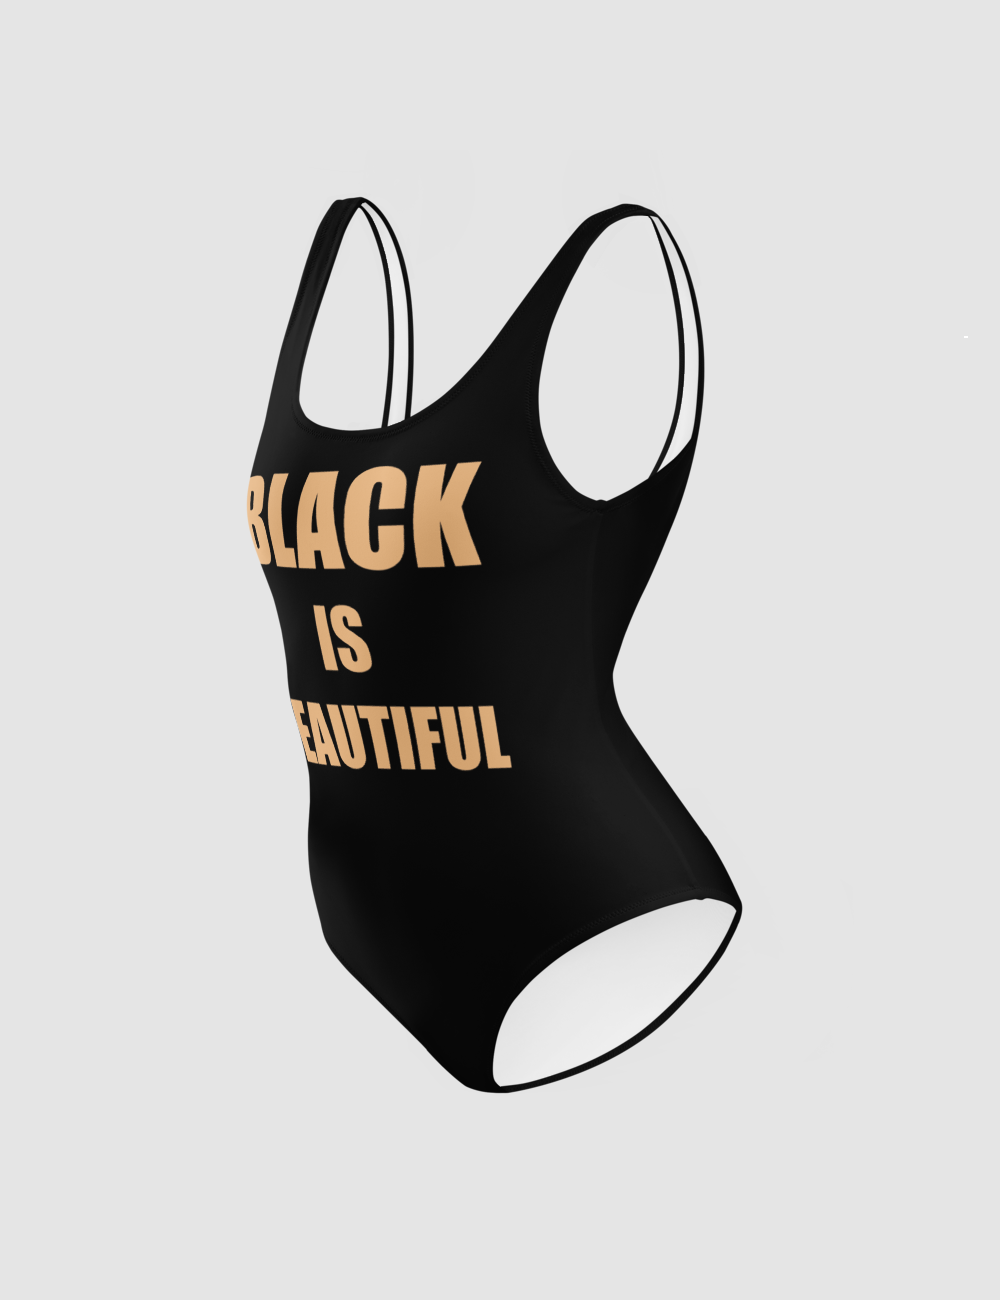 Black Is Beautiful | Women's One-Piece Swimsuit OniTakai